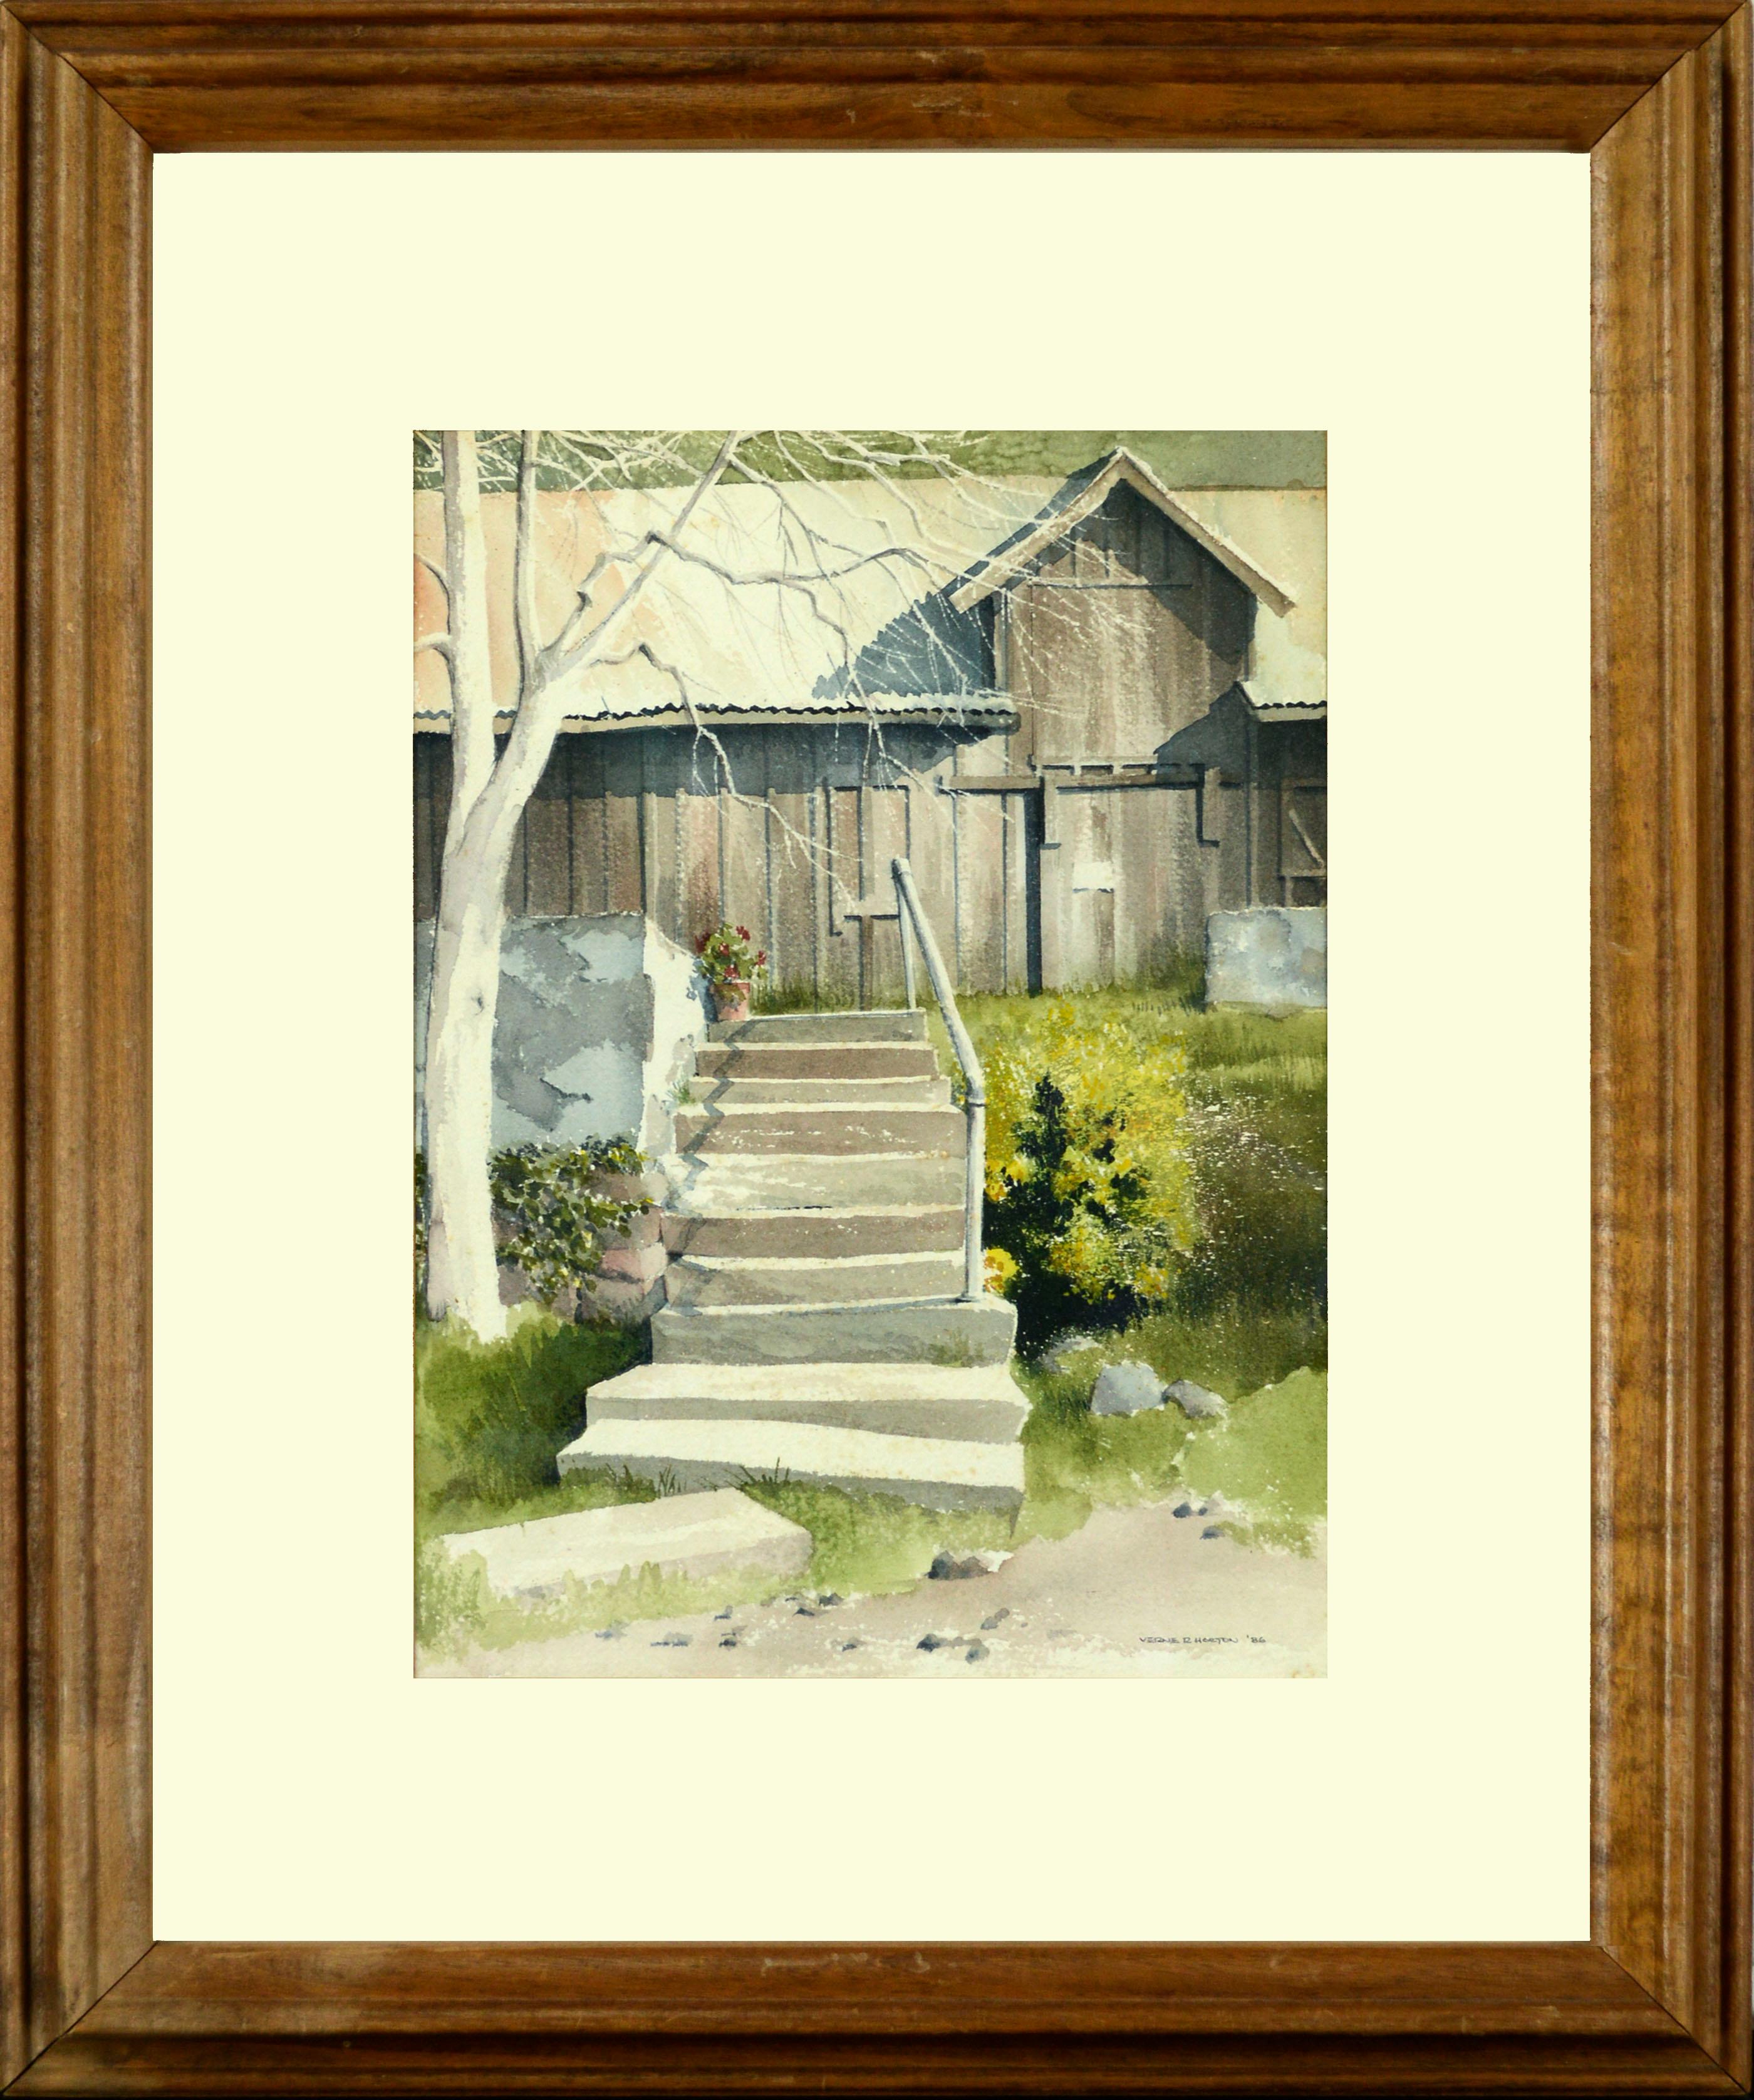 Verne R. Horton Landscape Art - "Steps", 1980s Farmhouse Staircase Realist Watercolor Landscape with Barn 